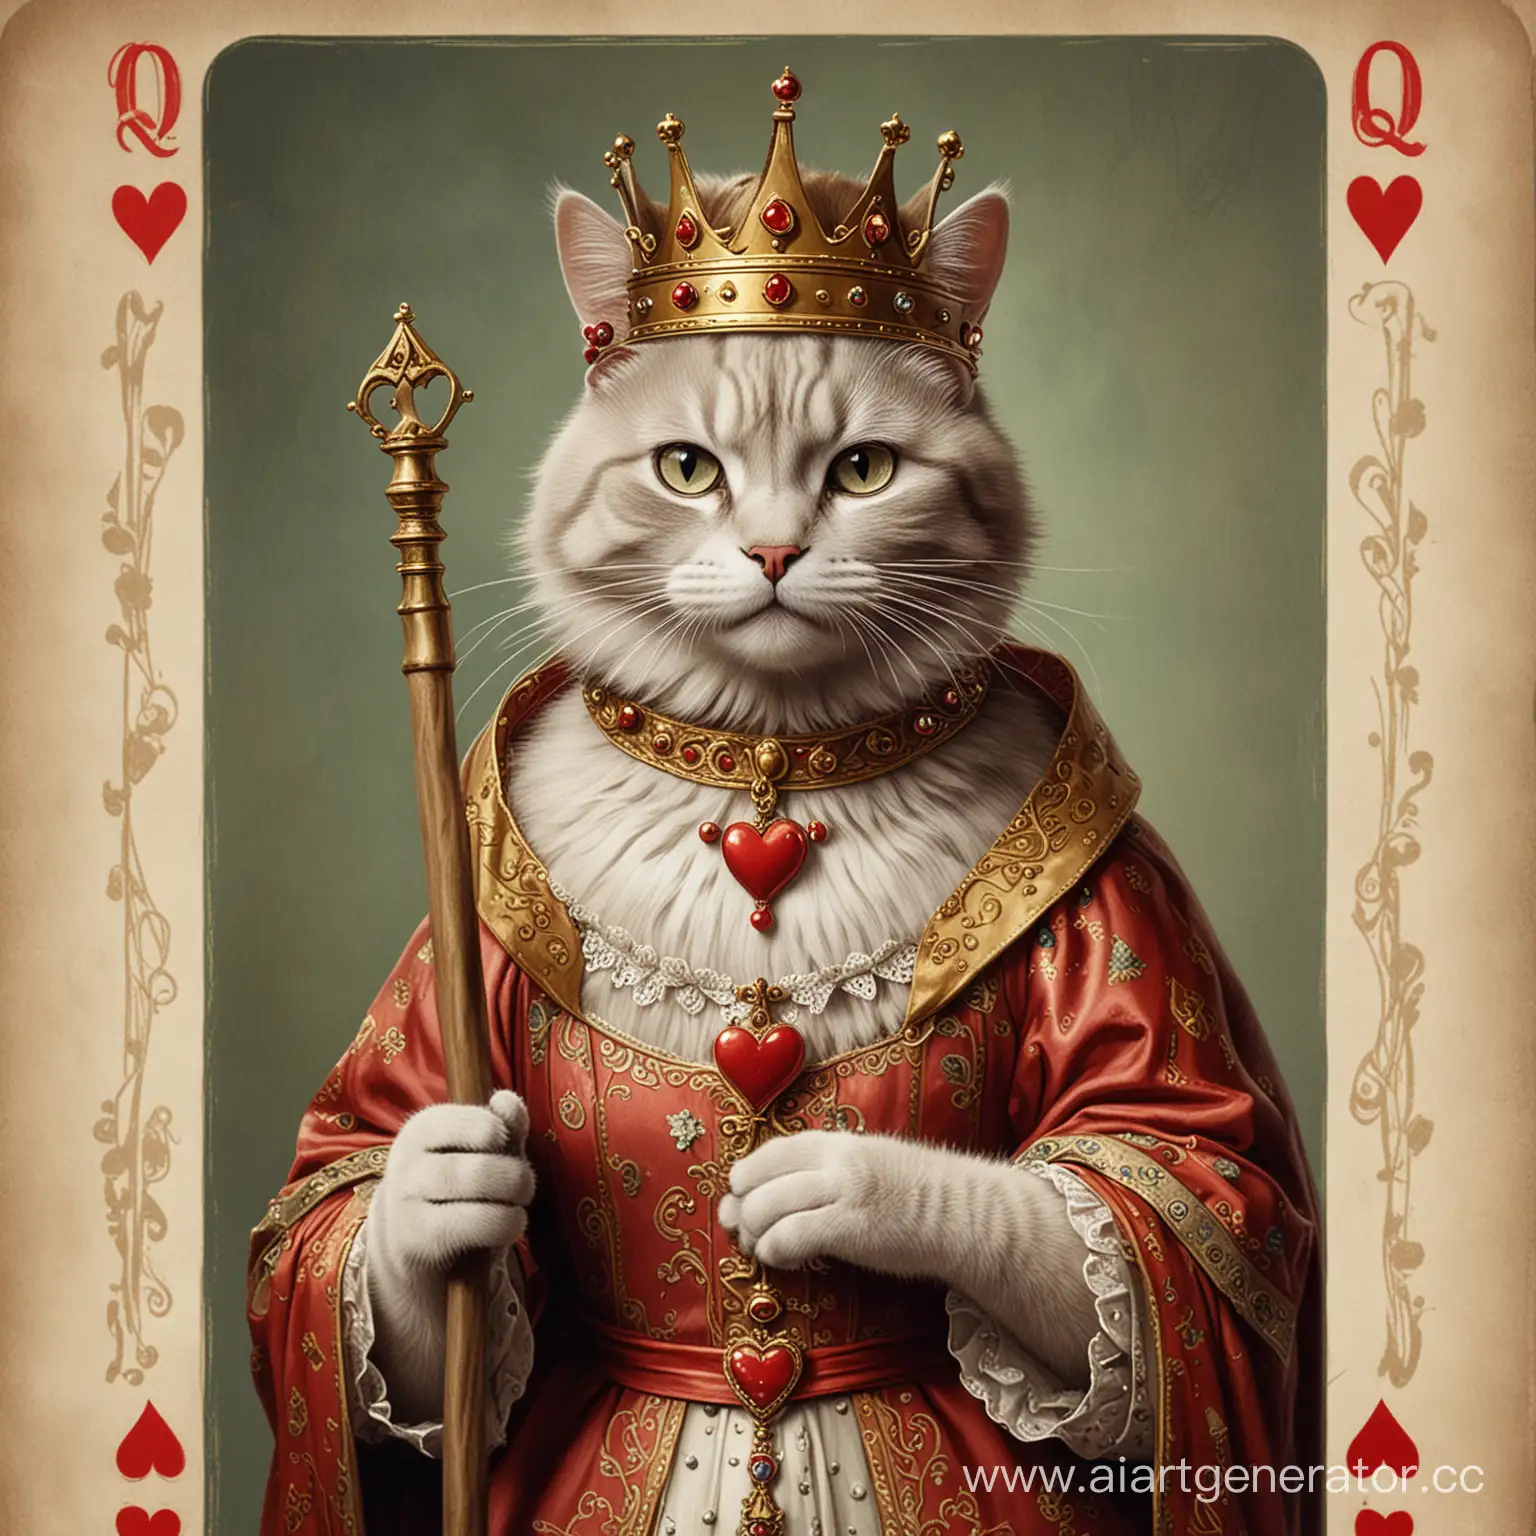 Majestic-Queen-of-Hearts-with-Feline-Staff-in-Regal-Attire